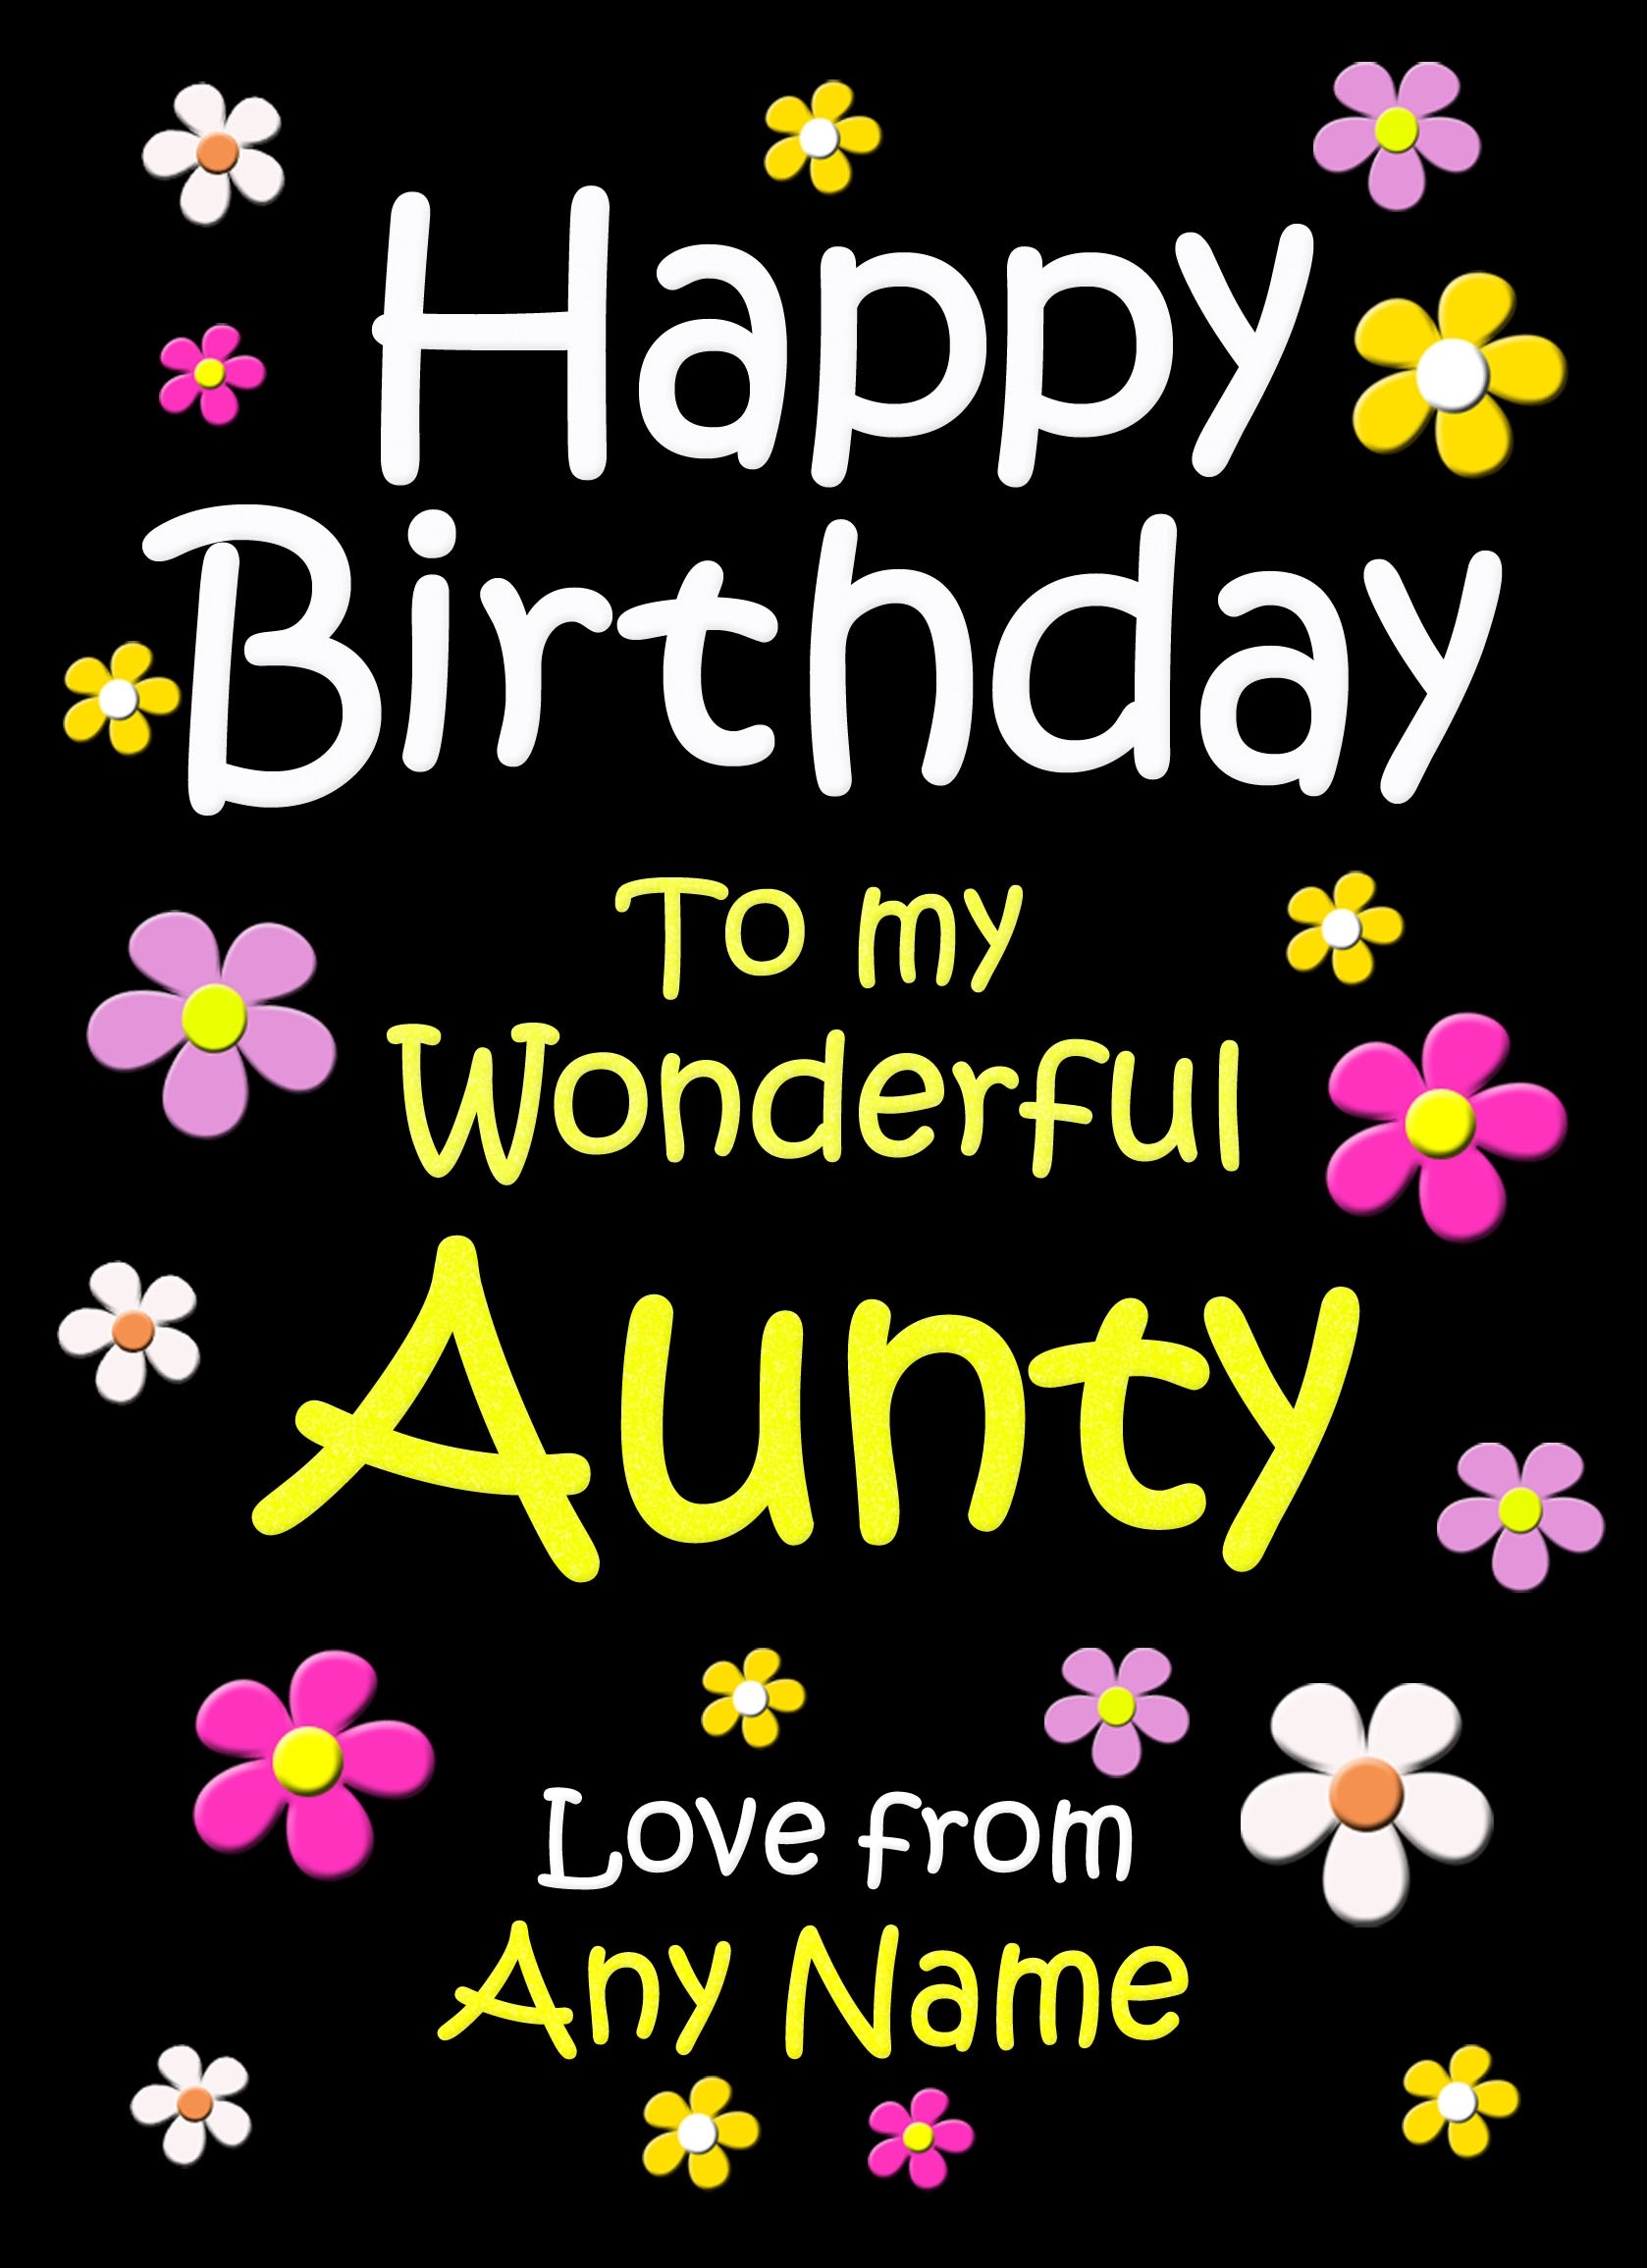 Personalised Aunty Birthday Card (Black)